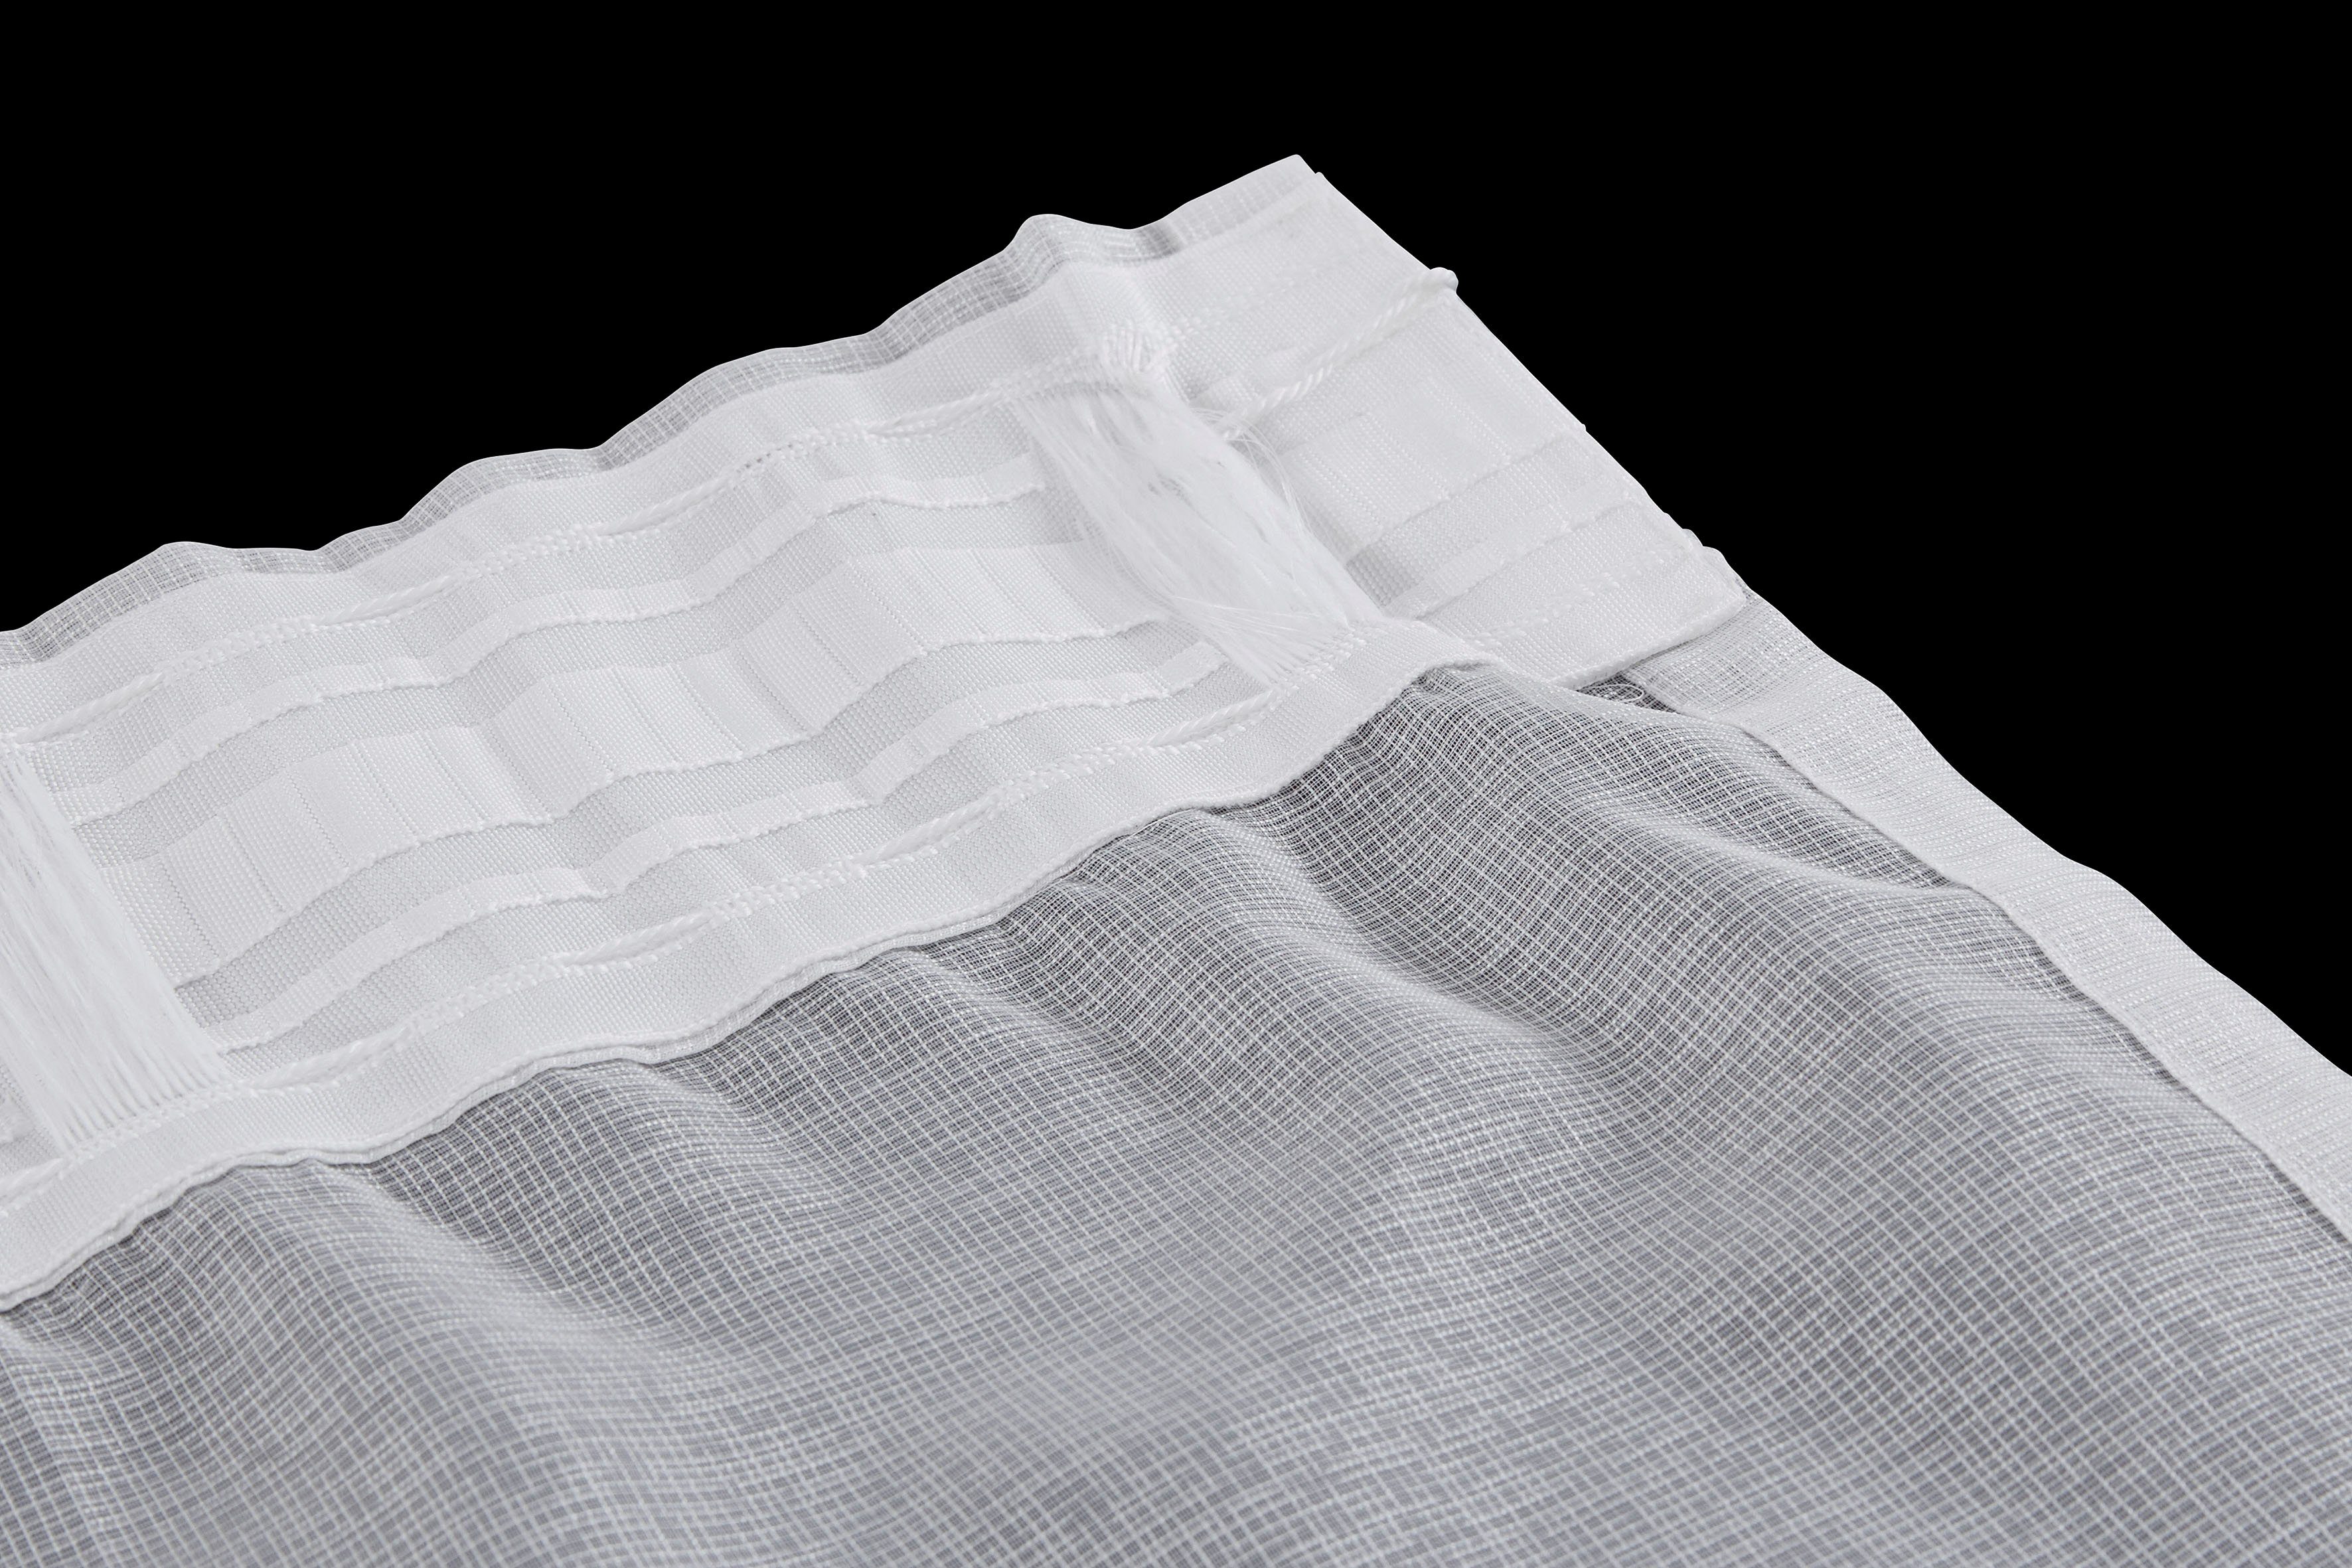 Gardine Yalinga, my home, (1 Polyester Multifunktionsband transparent, weiß/grau St), Halbtransparent